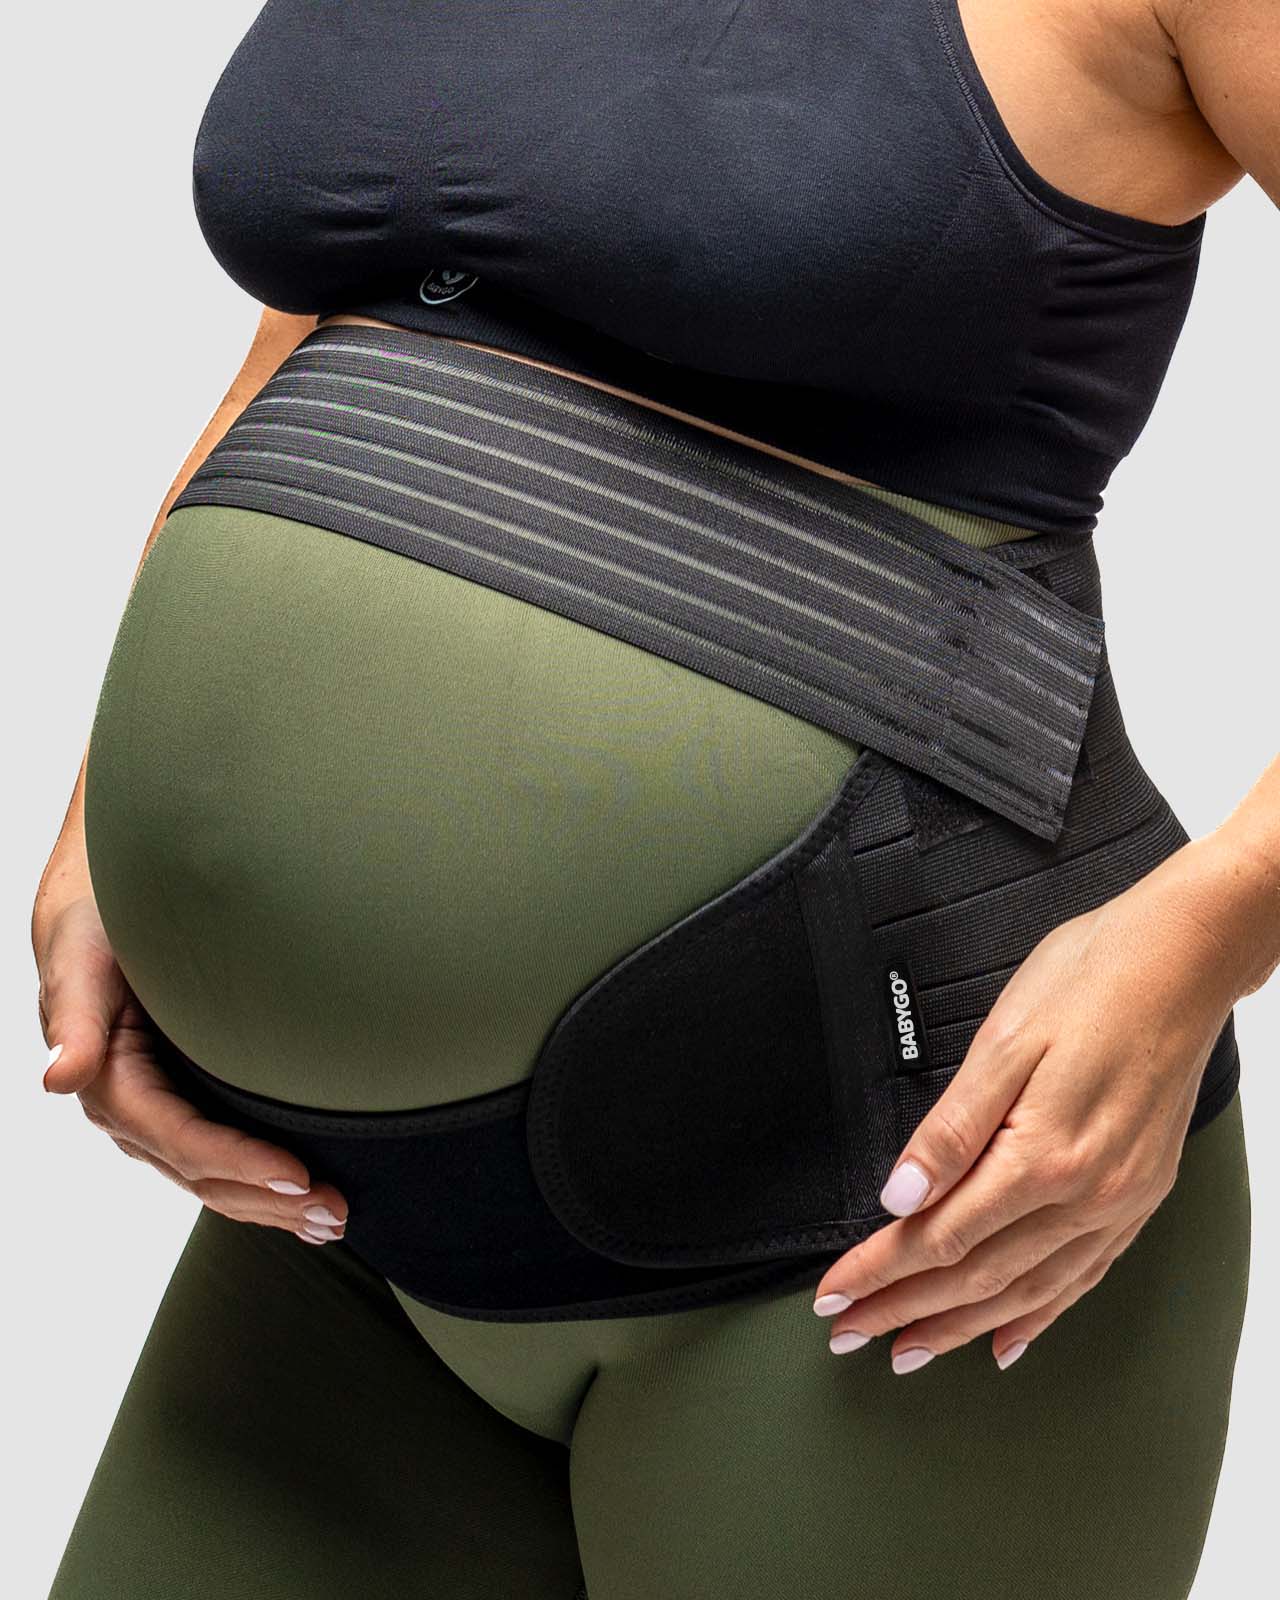 Pregnancy Belt  Maternity Support Pelvic SPD Back Band - BABYGO¨